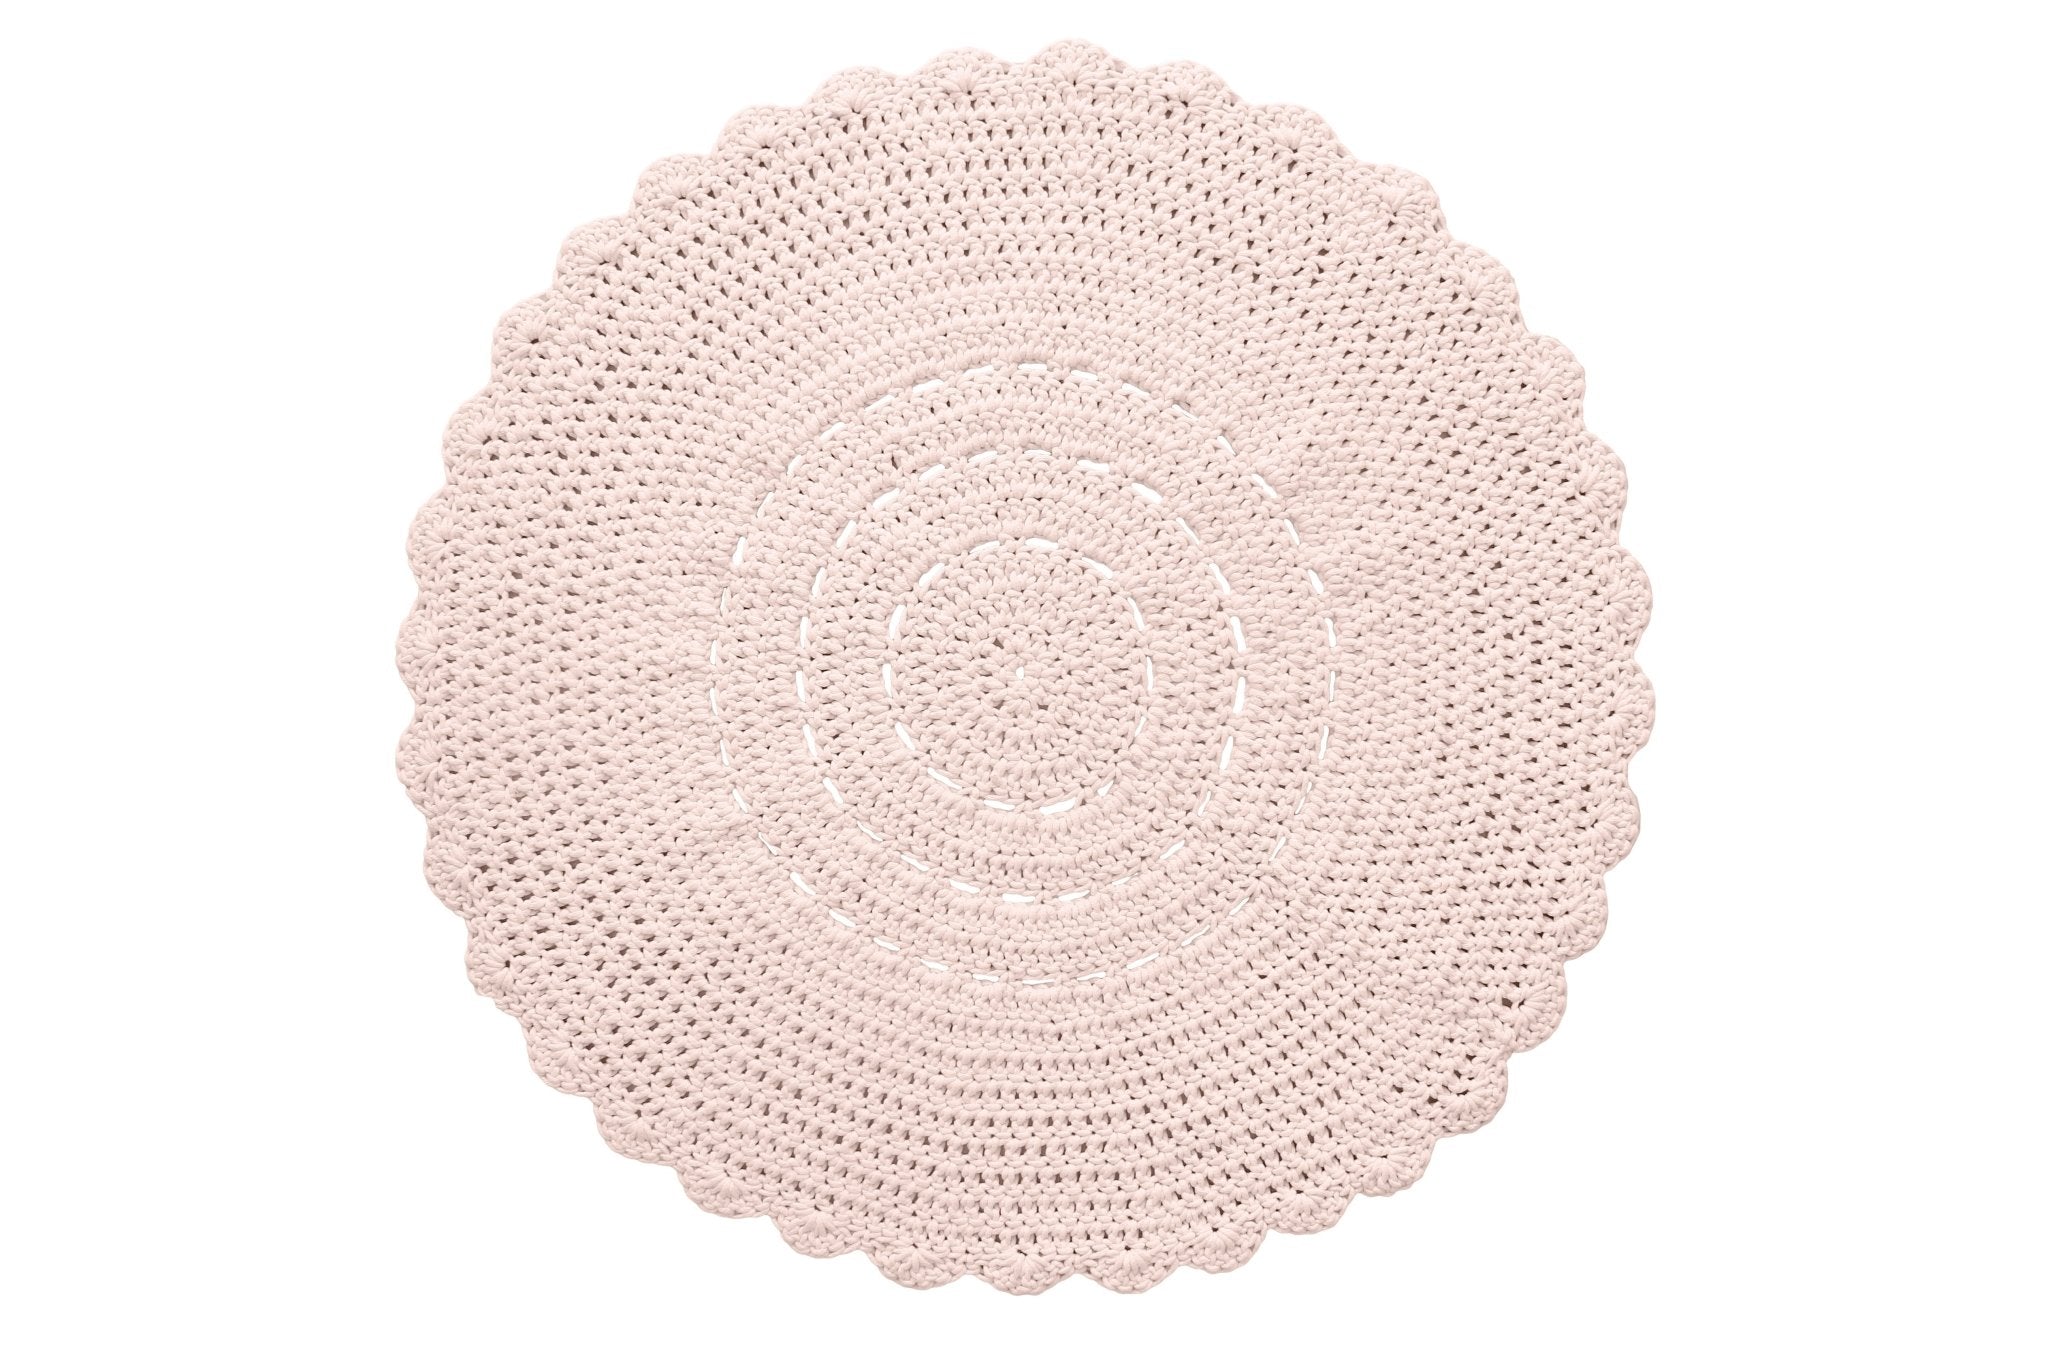 Zuri House Crochet Doily Rug | PALE PINK - 90 cm